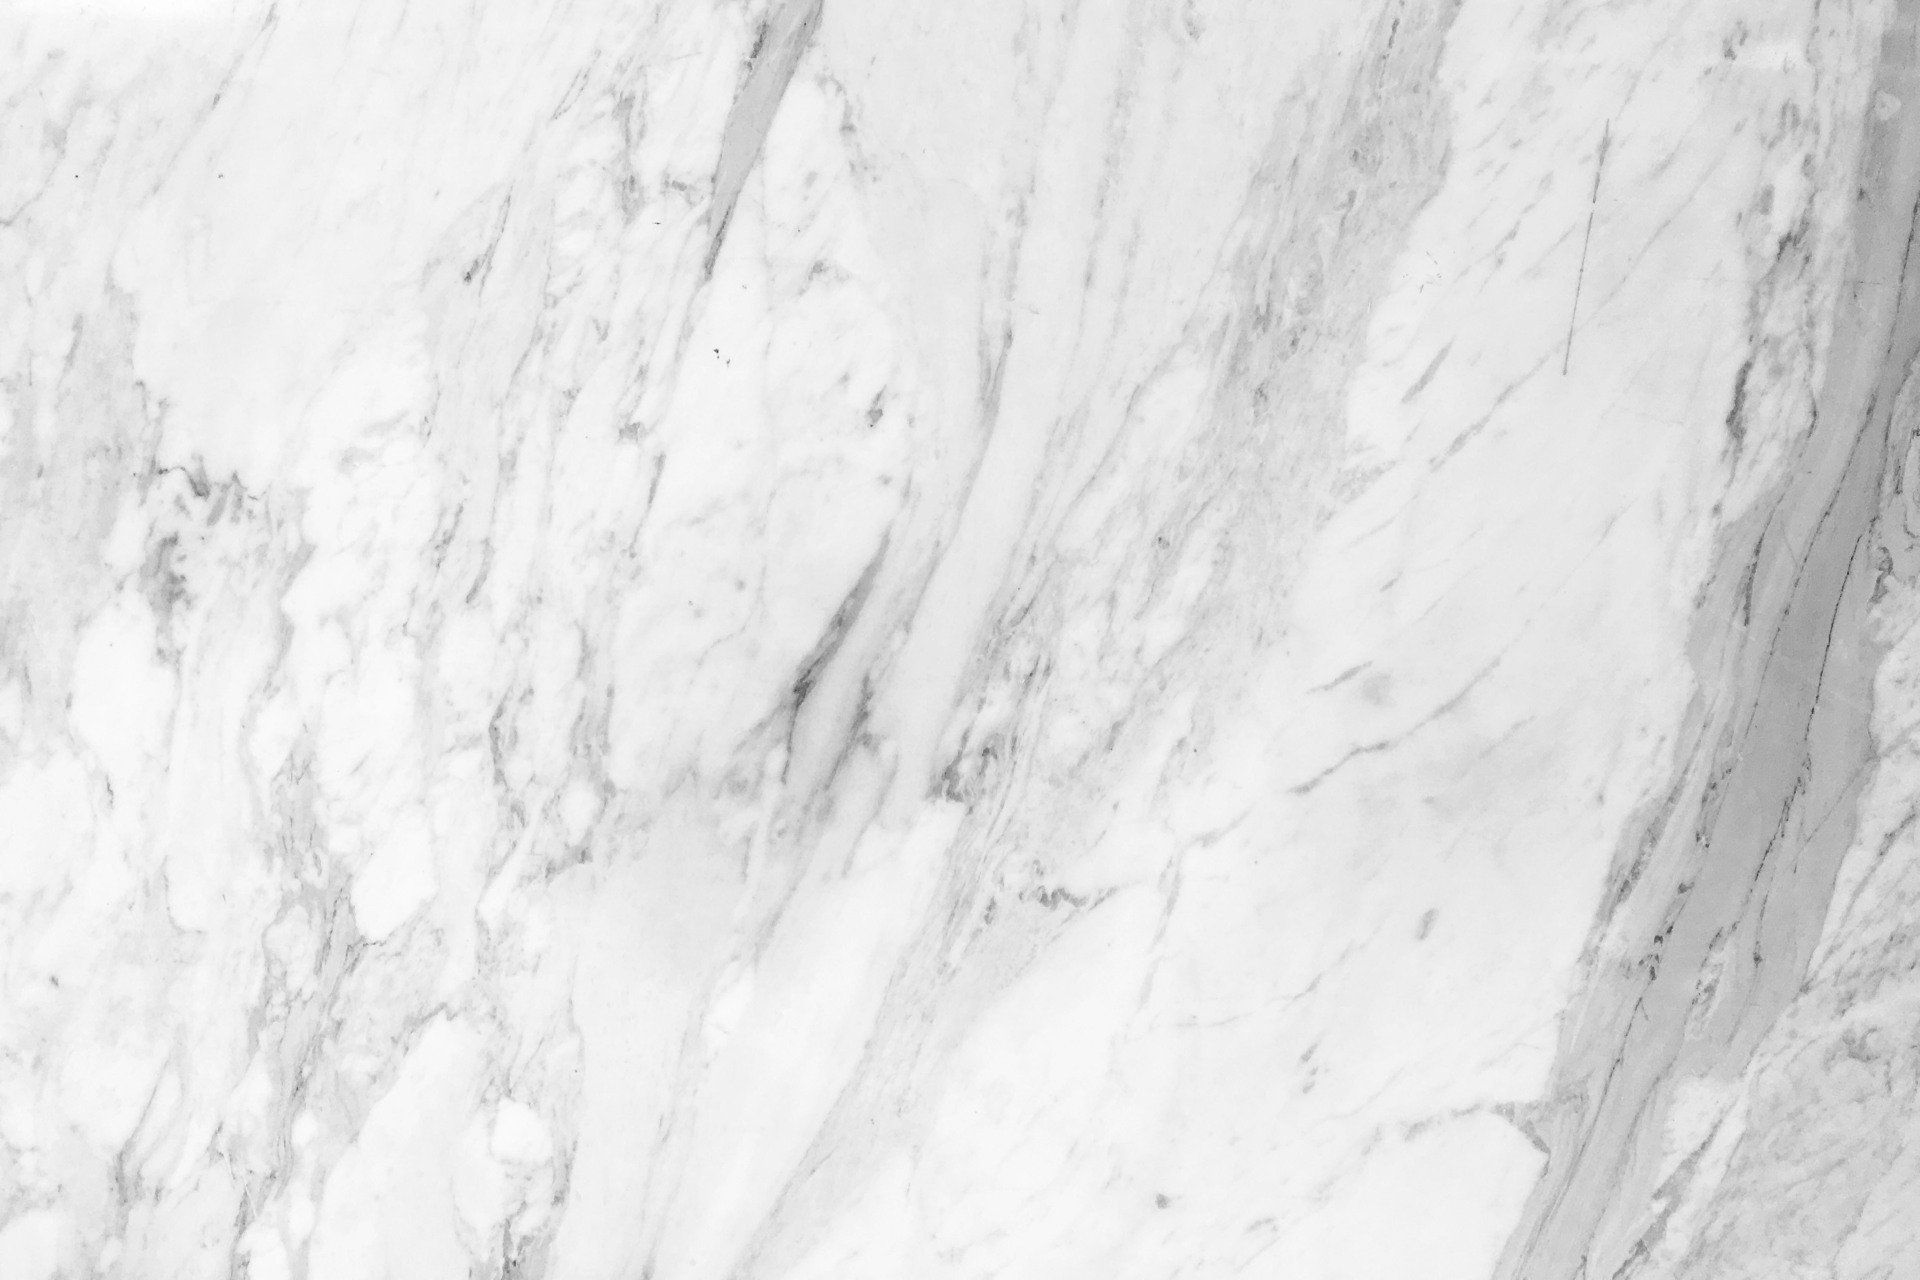 Sample of a marble bathroom countertop